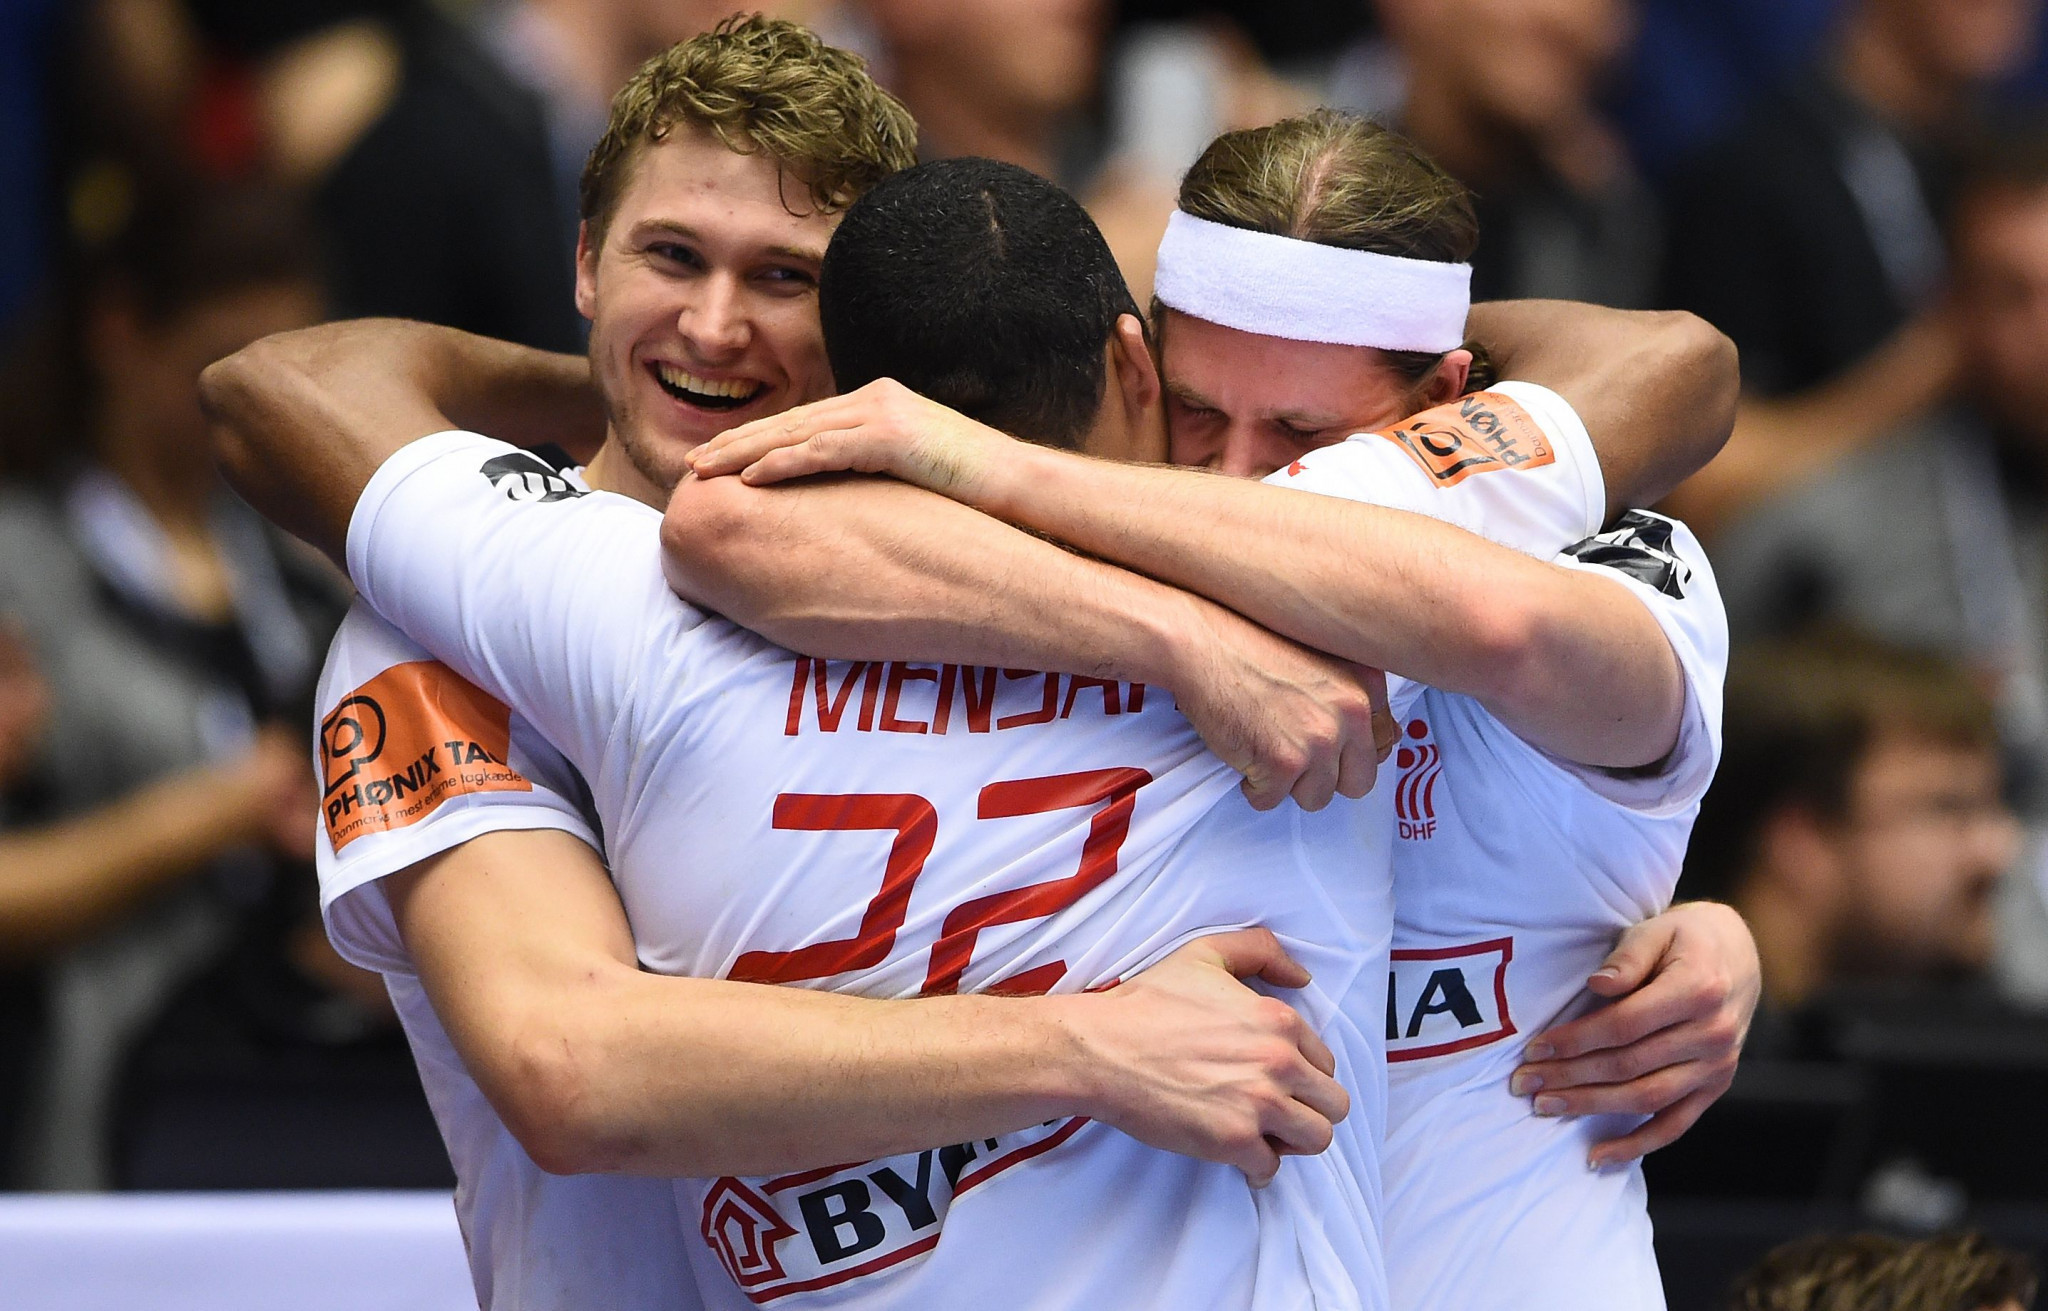 Olympic champions Denmark win World Men's Handball Championship on home soil